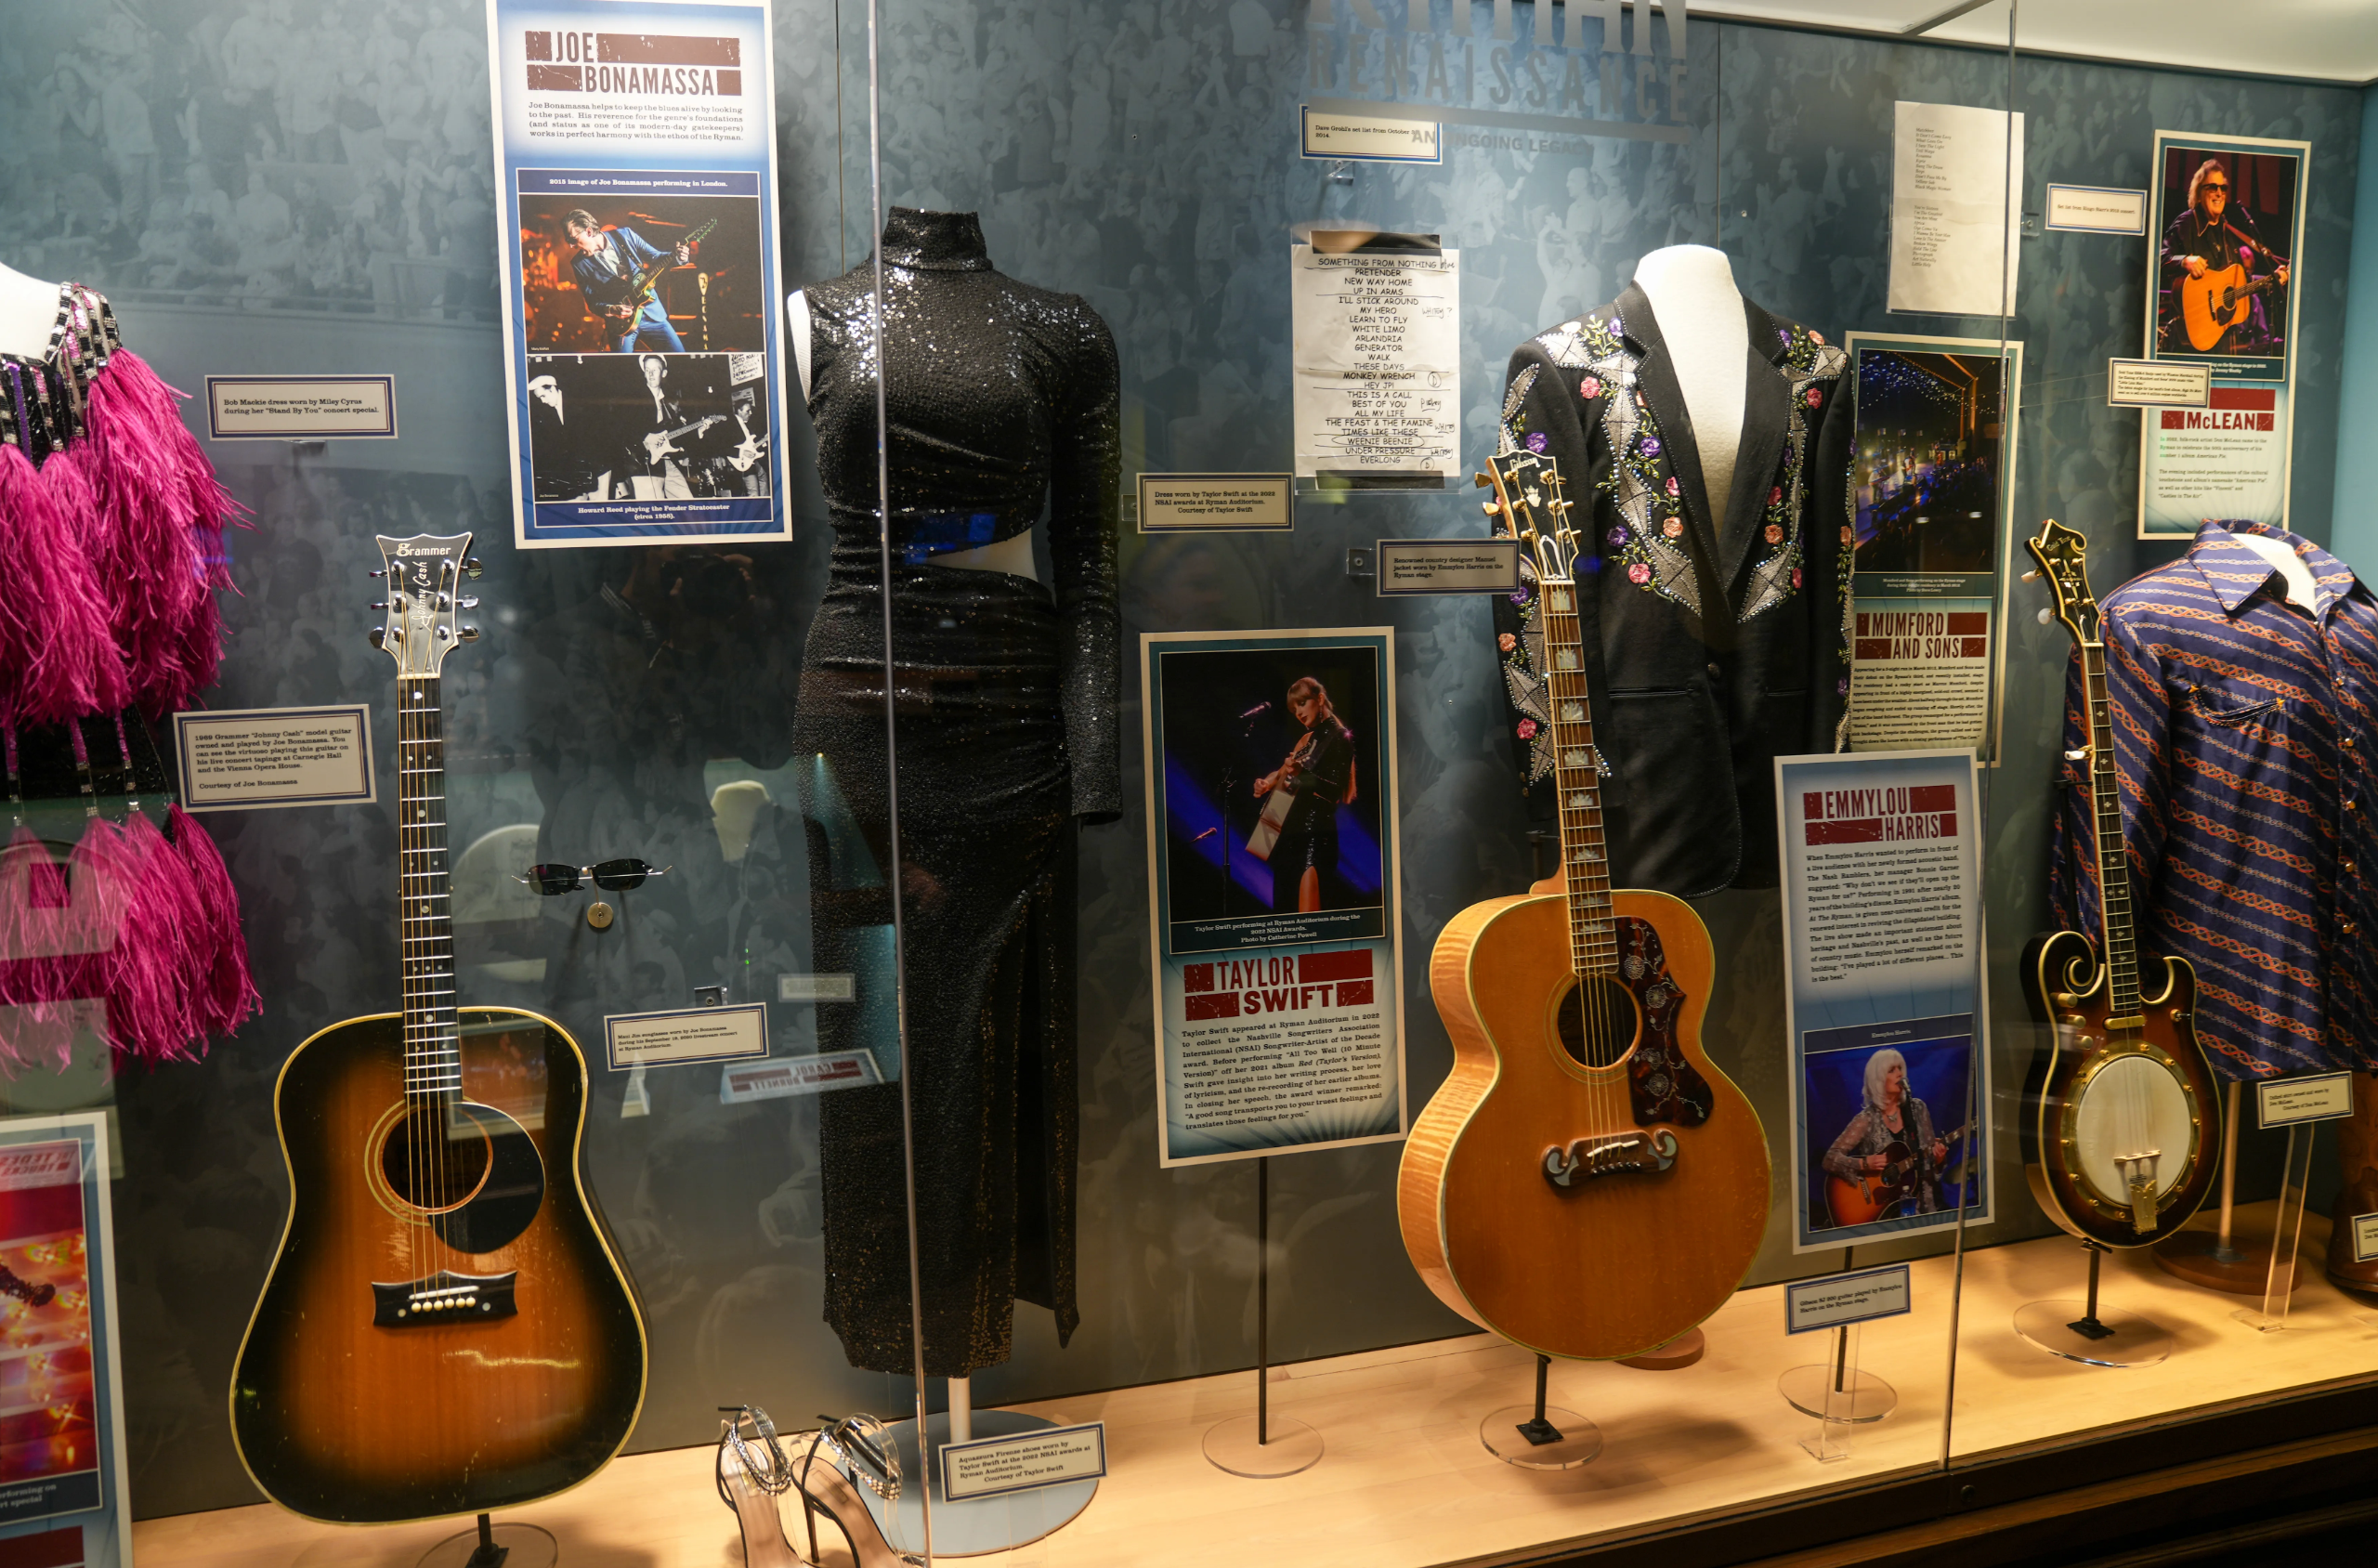 Ryman tour display containing Taylor Swift's black dress. 